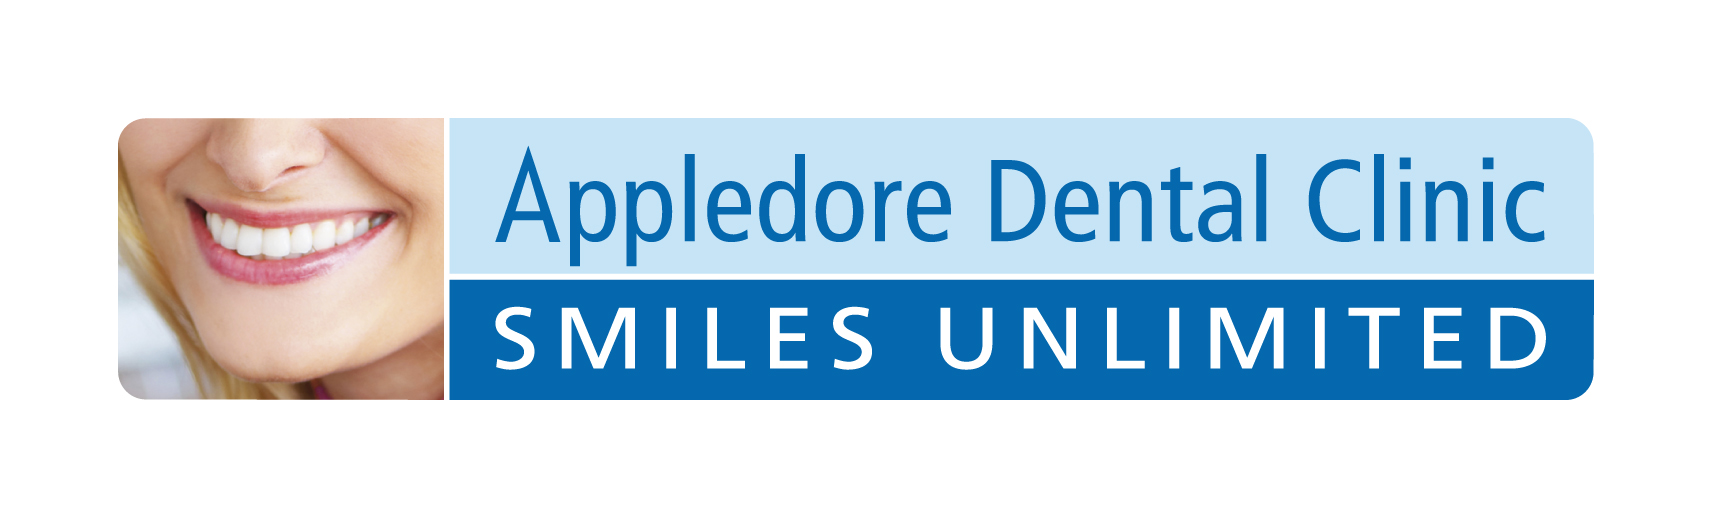 Appledore Dental Clinic